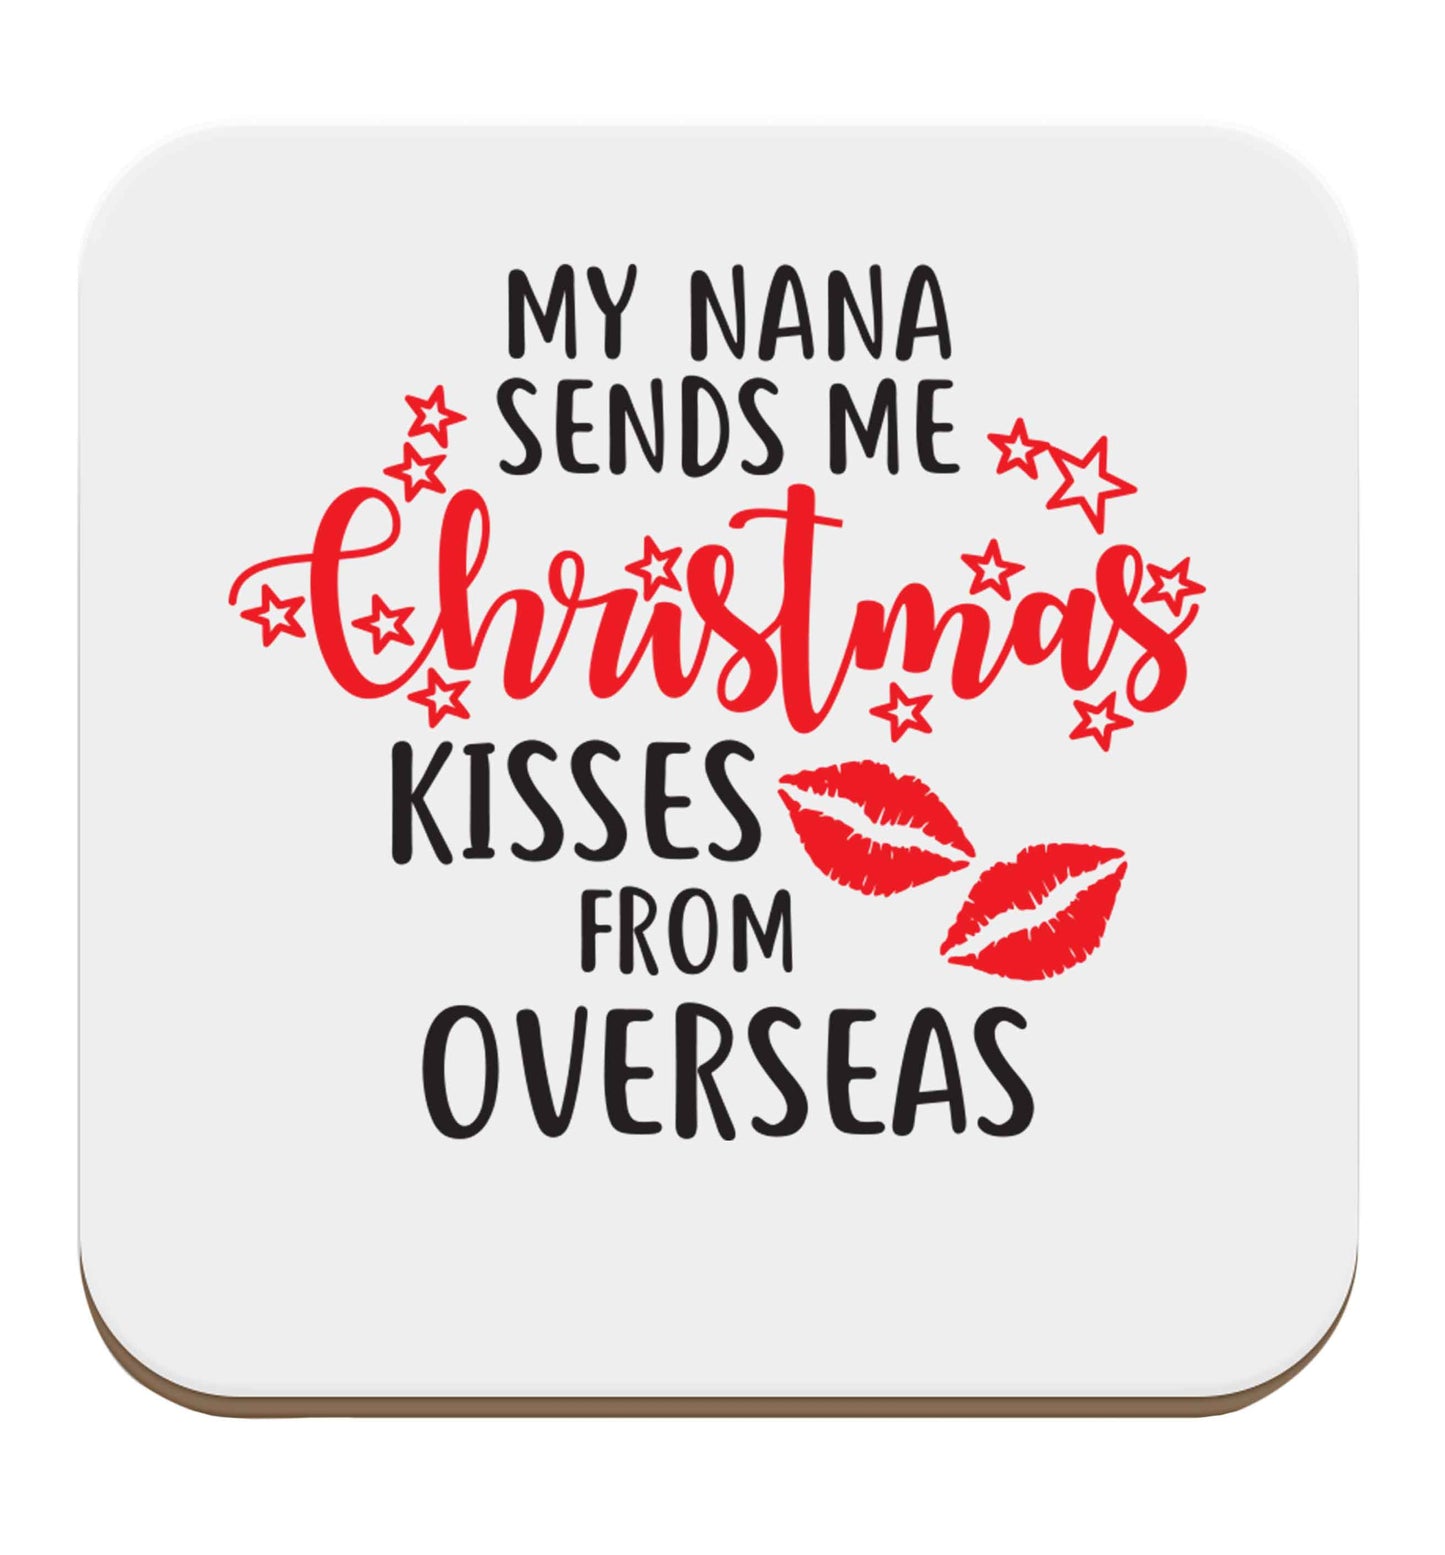 Grandma Christmas Kisses Overseas set of four coasters